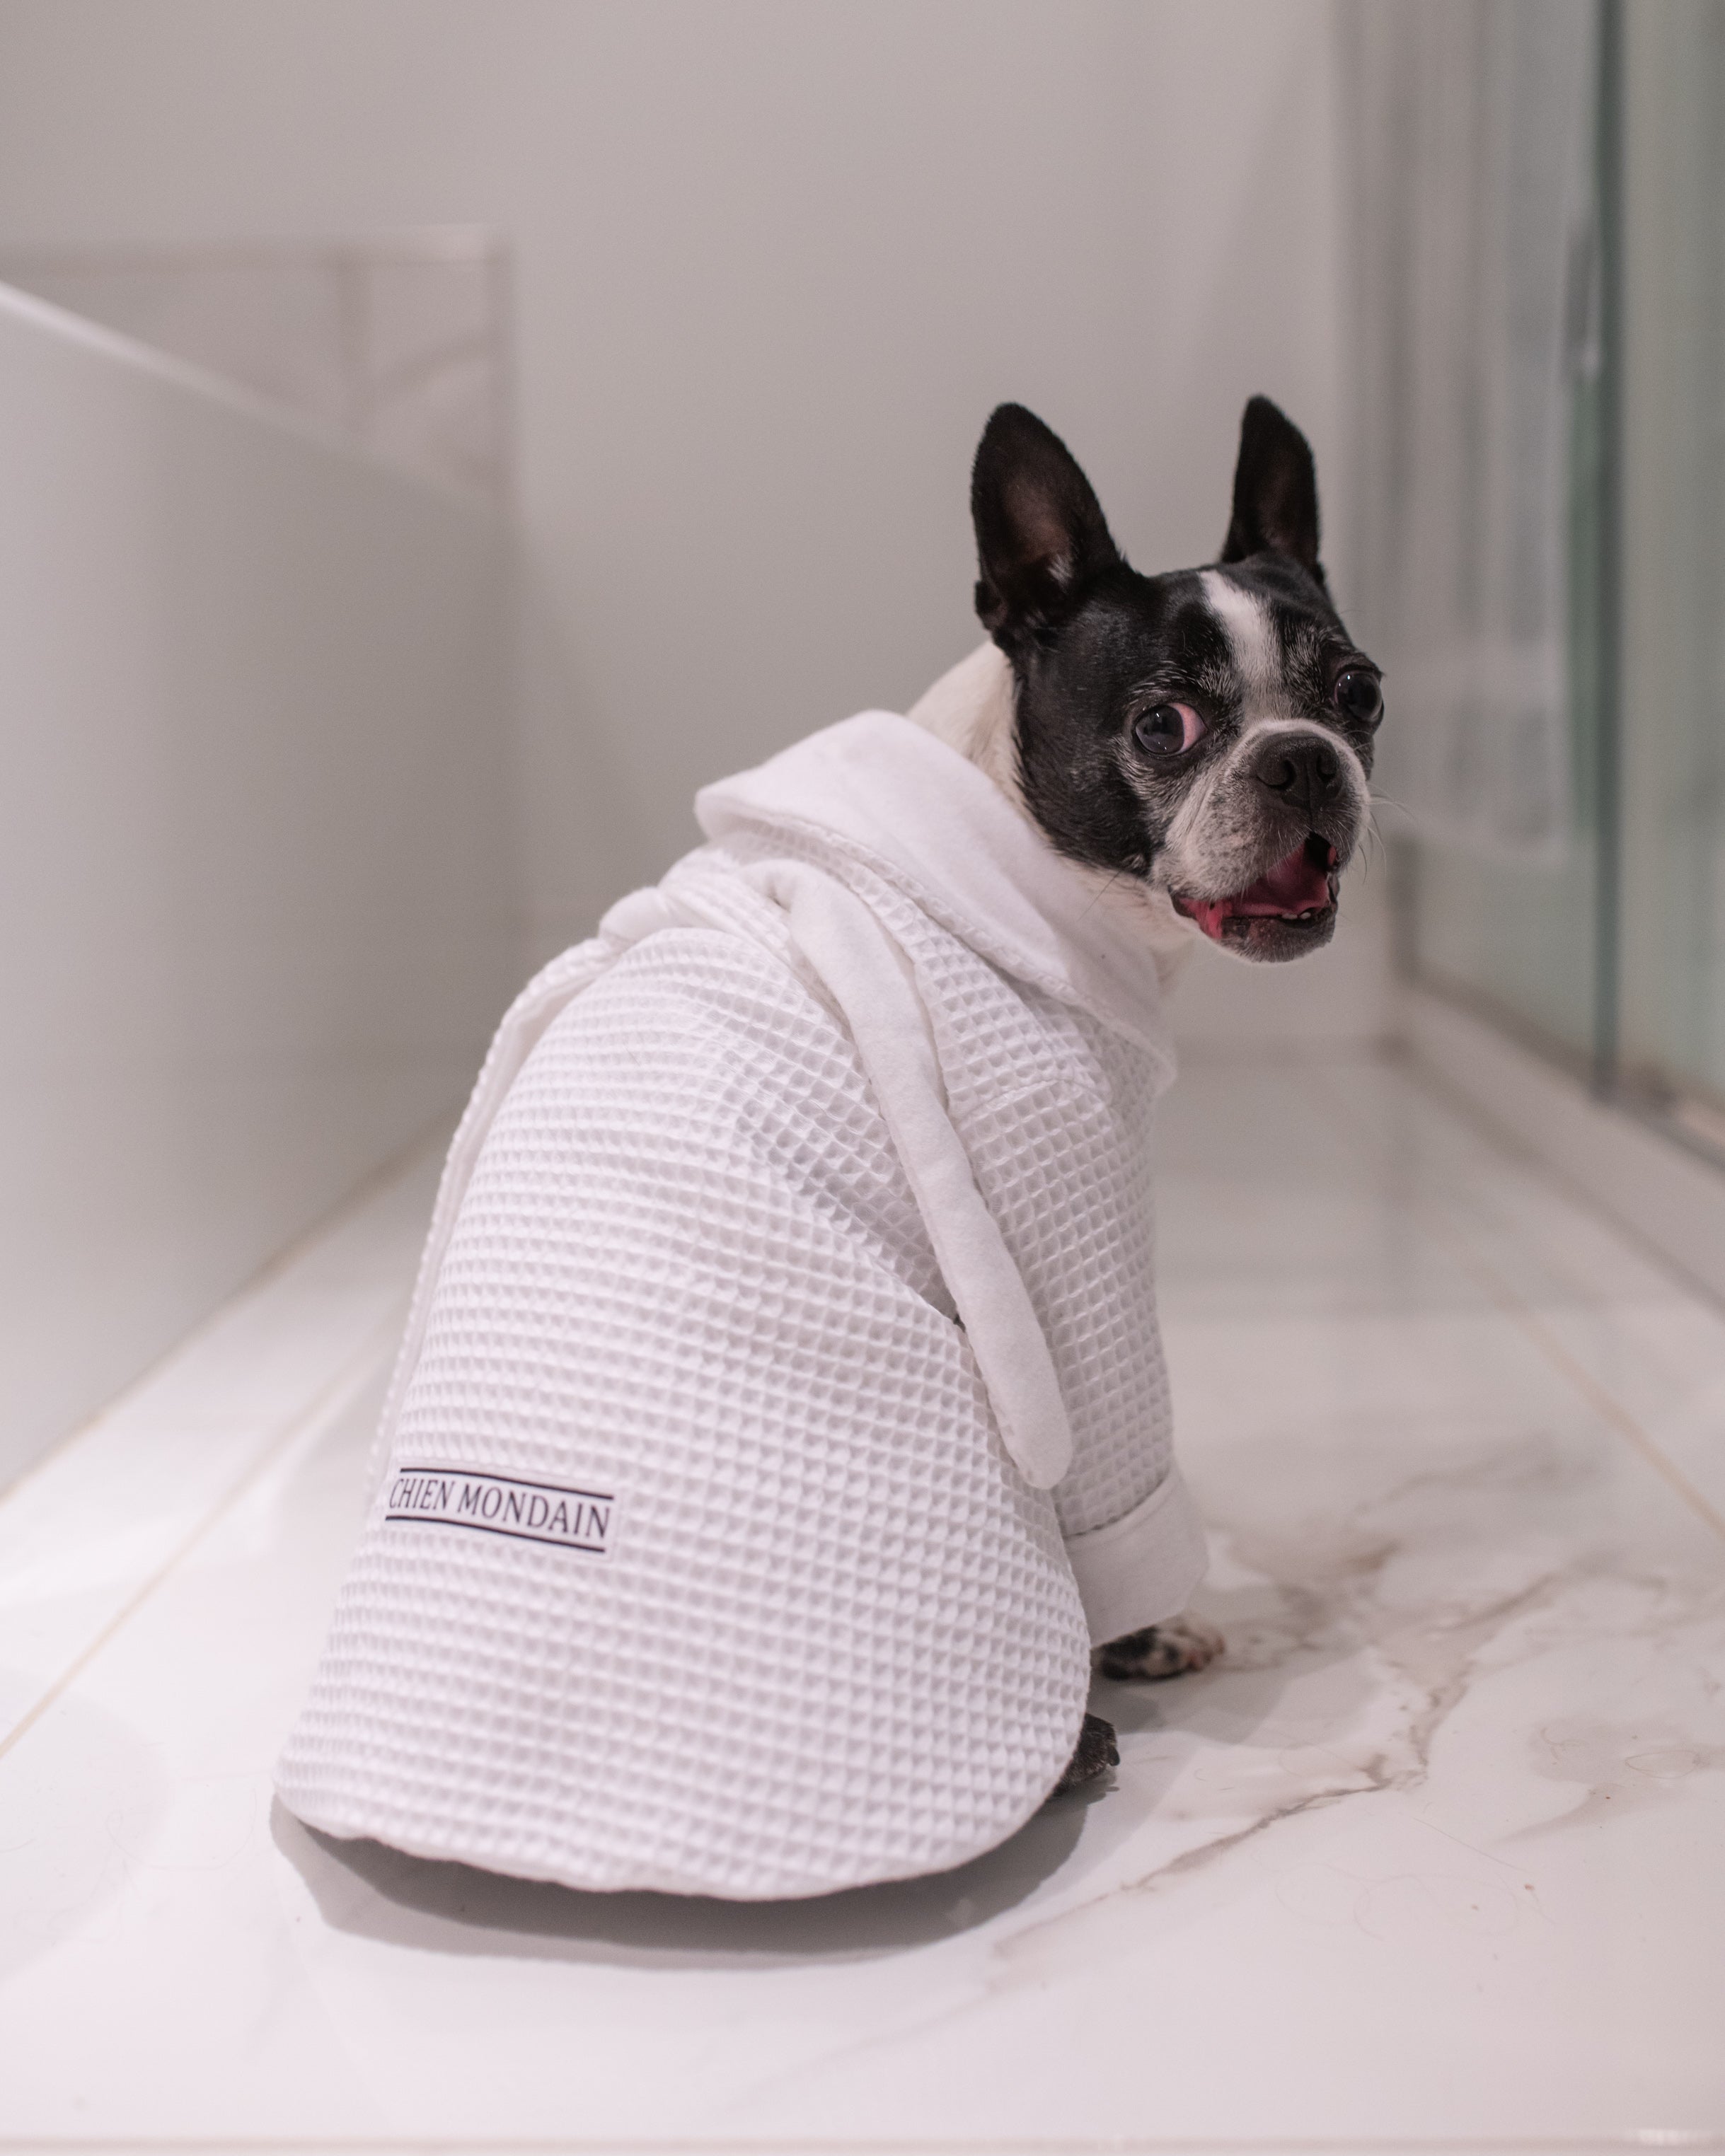 The Dog Mondain bathrobe